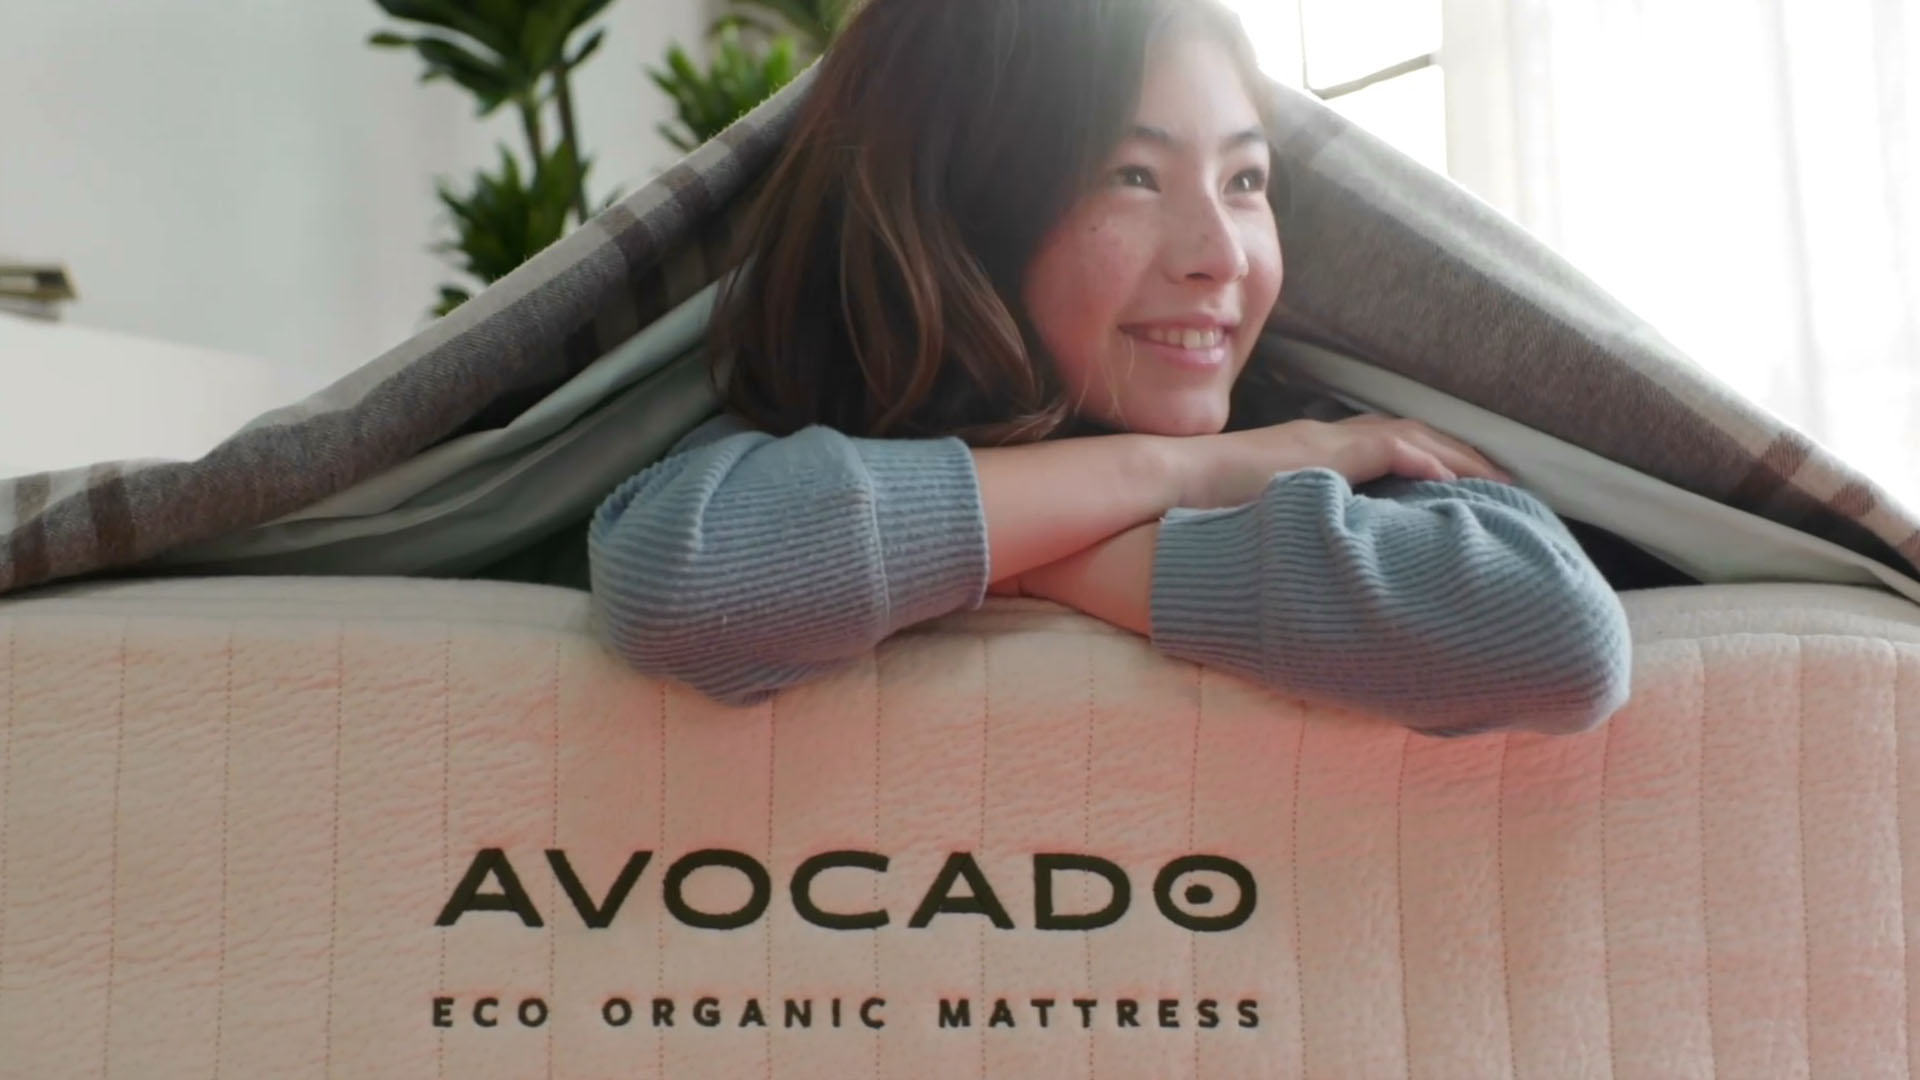 Who sells Avocado mattress near me in Fullerton